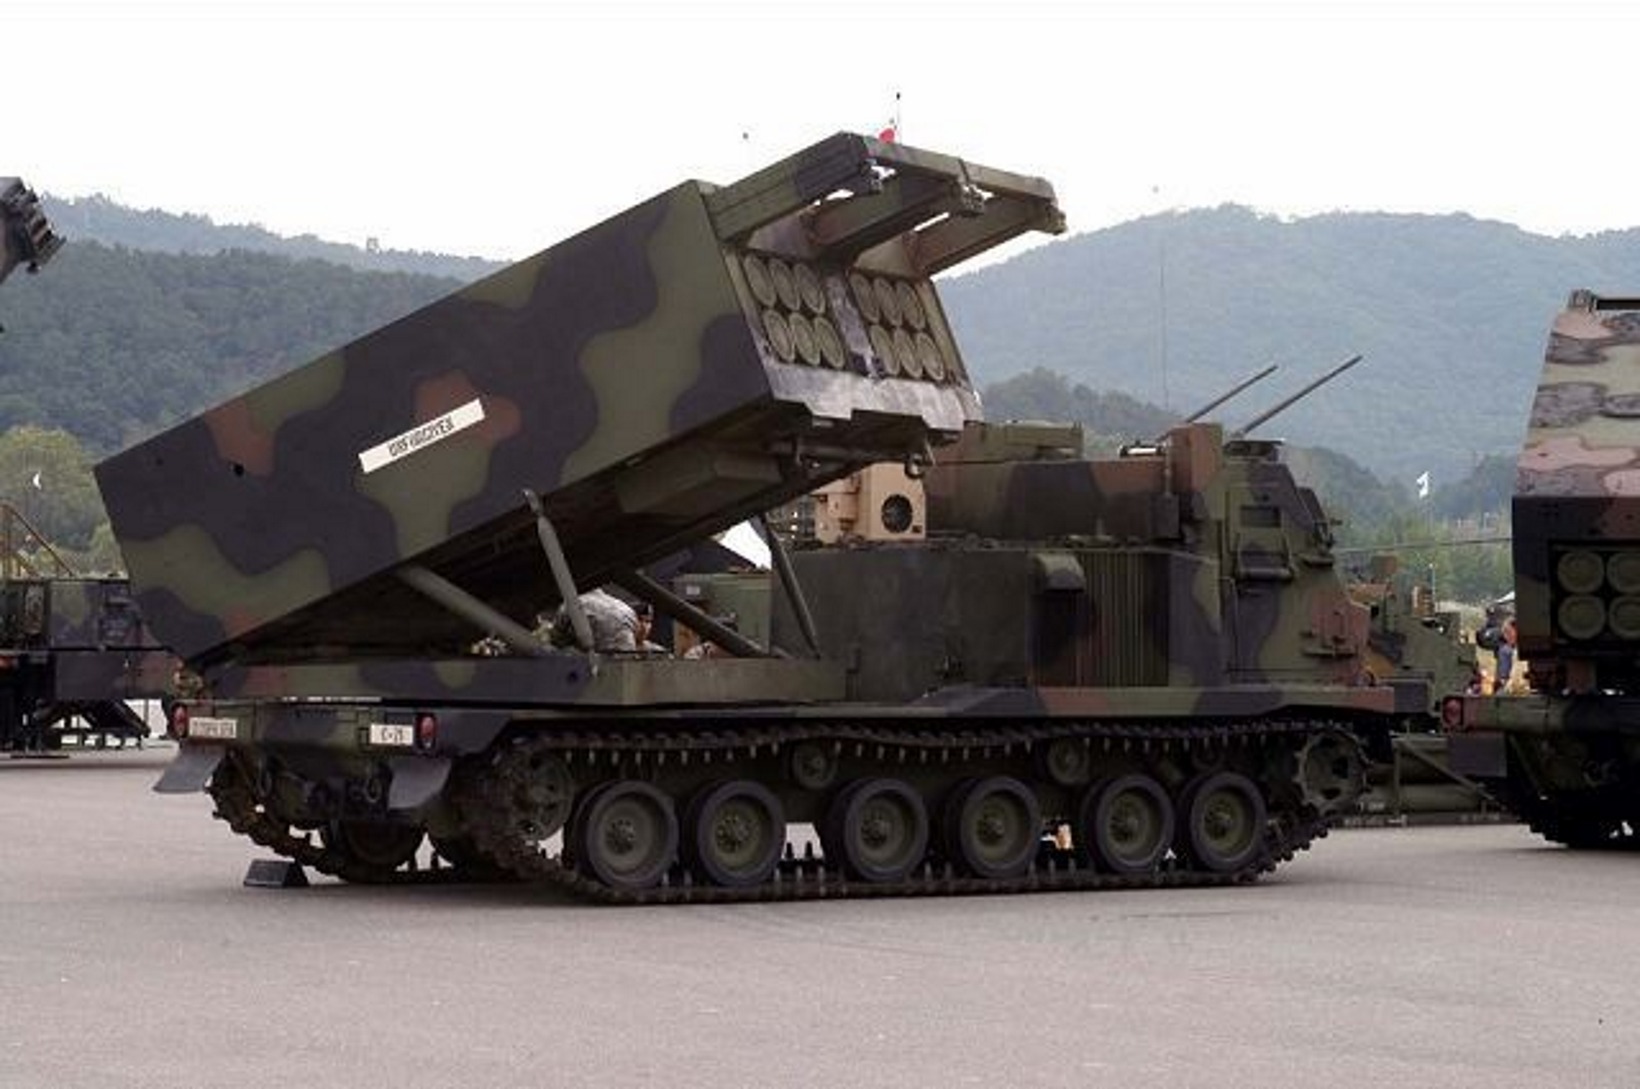 Estados Unidos desplegó 16 lanzacohetes múltiples M270 en Alemania